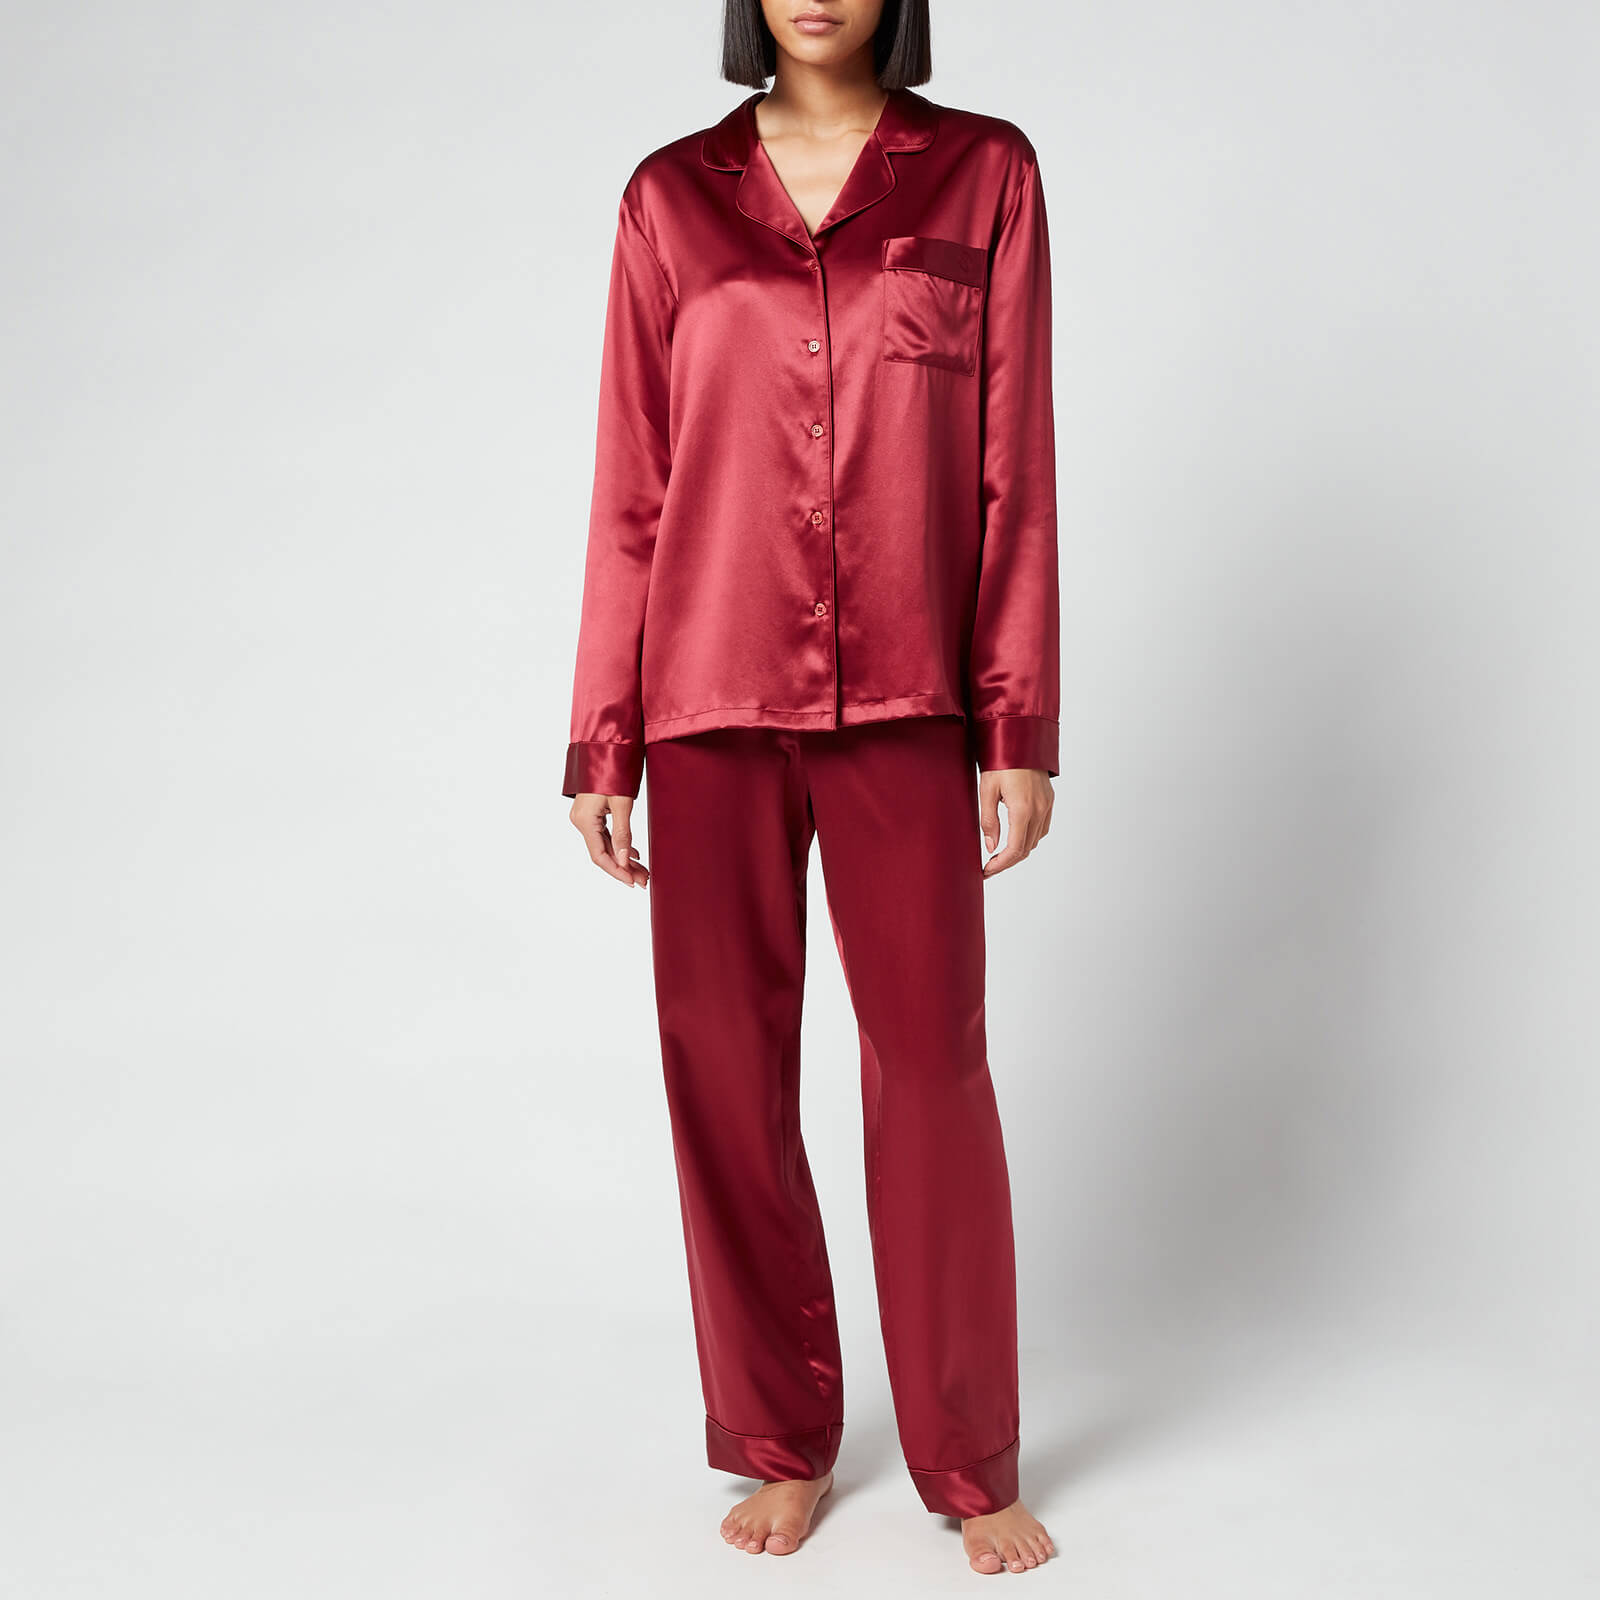 ESPA Silk Pyjamas - Claret Rose - XL